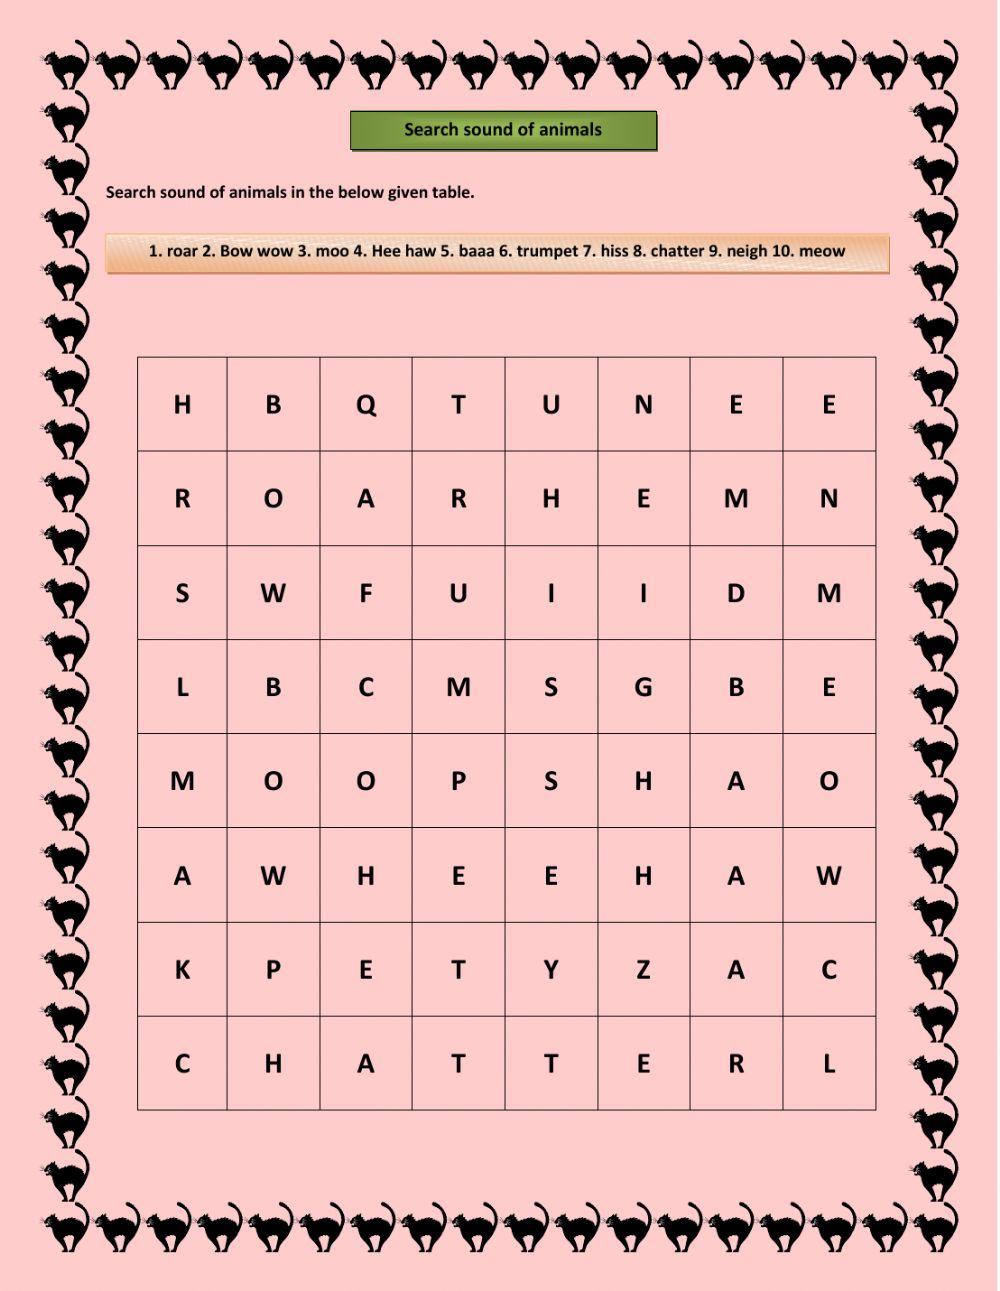 Crossword puzzle : Sound of animals